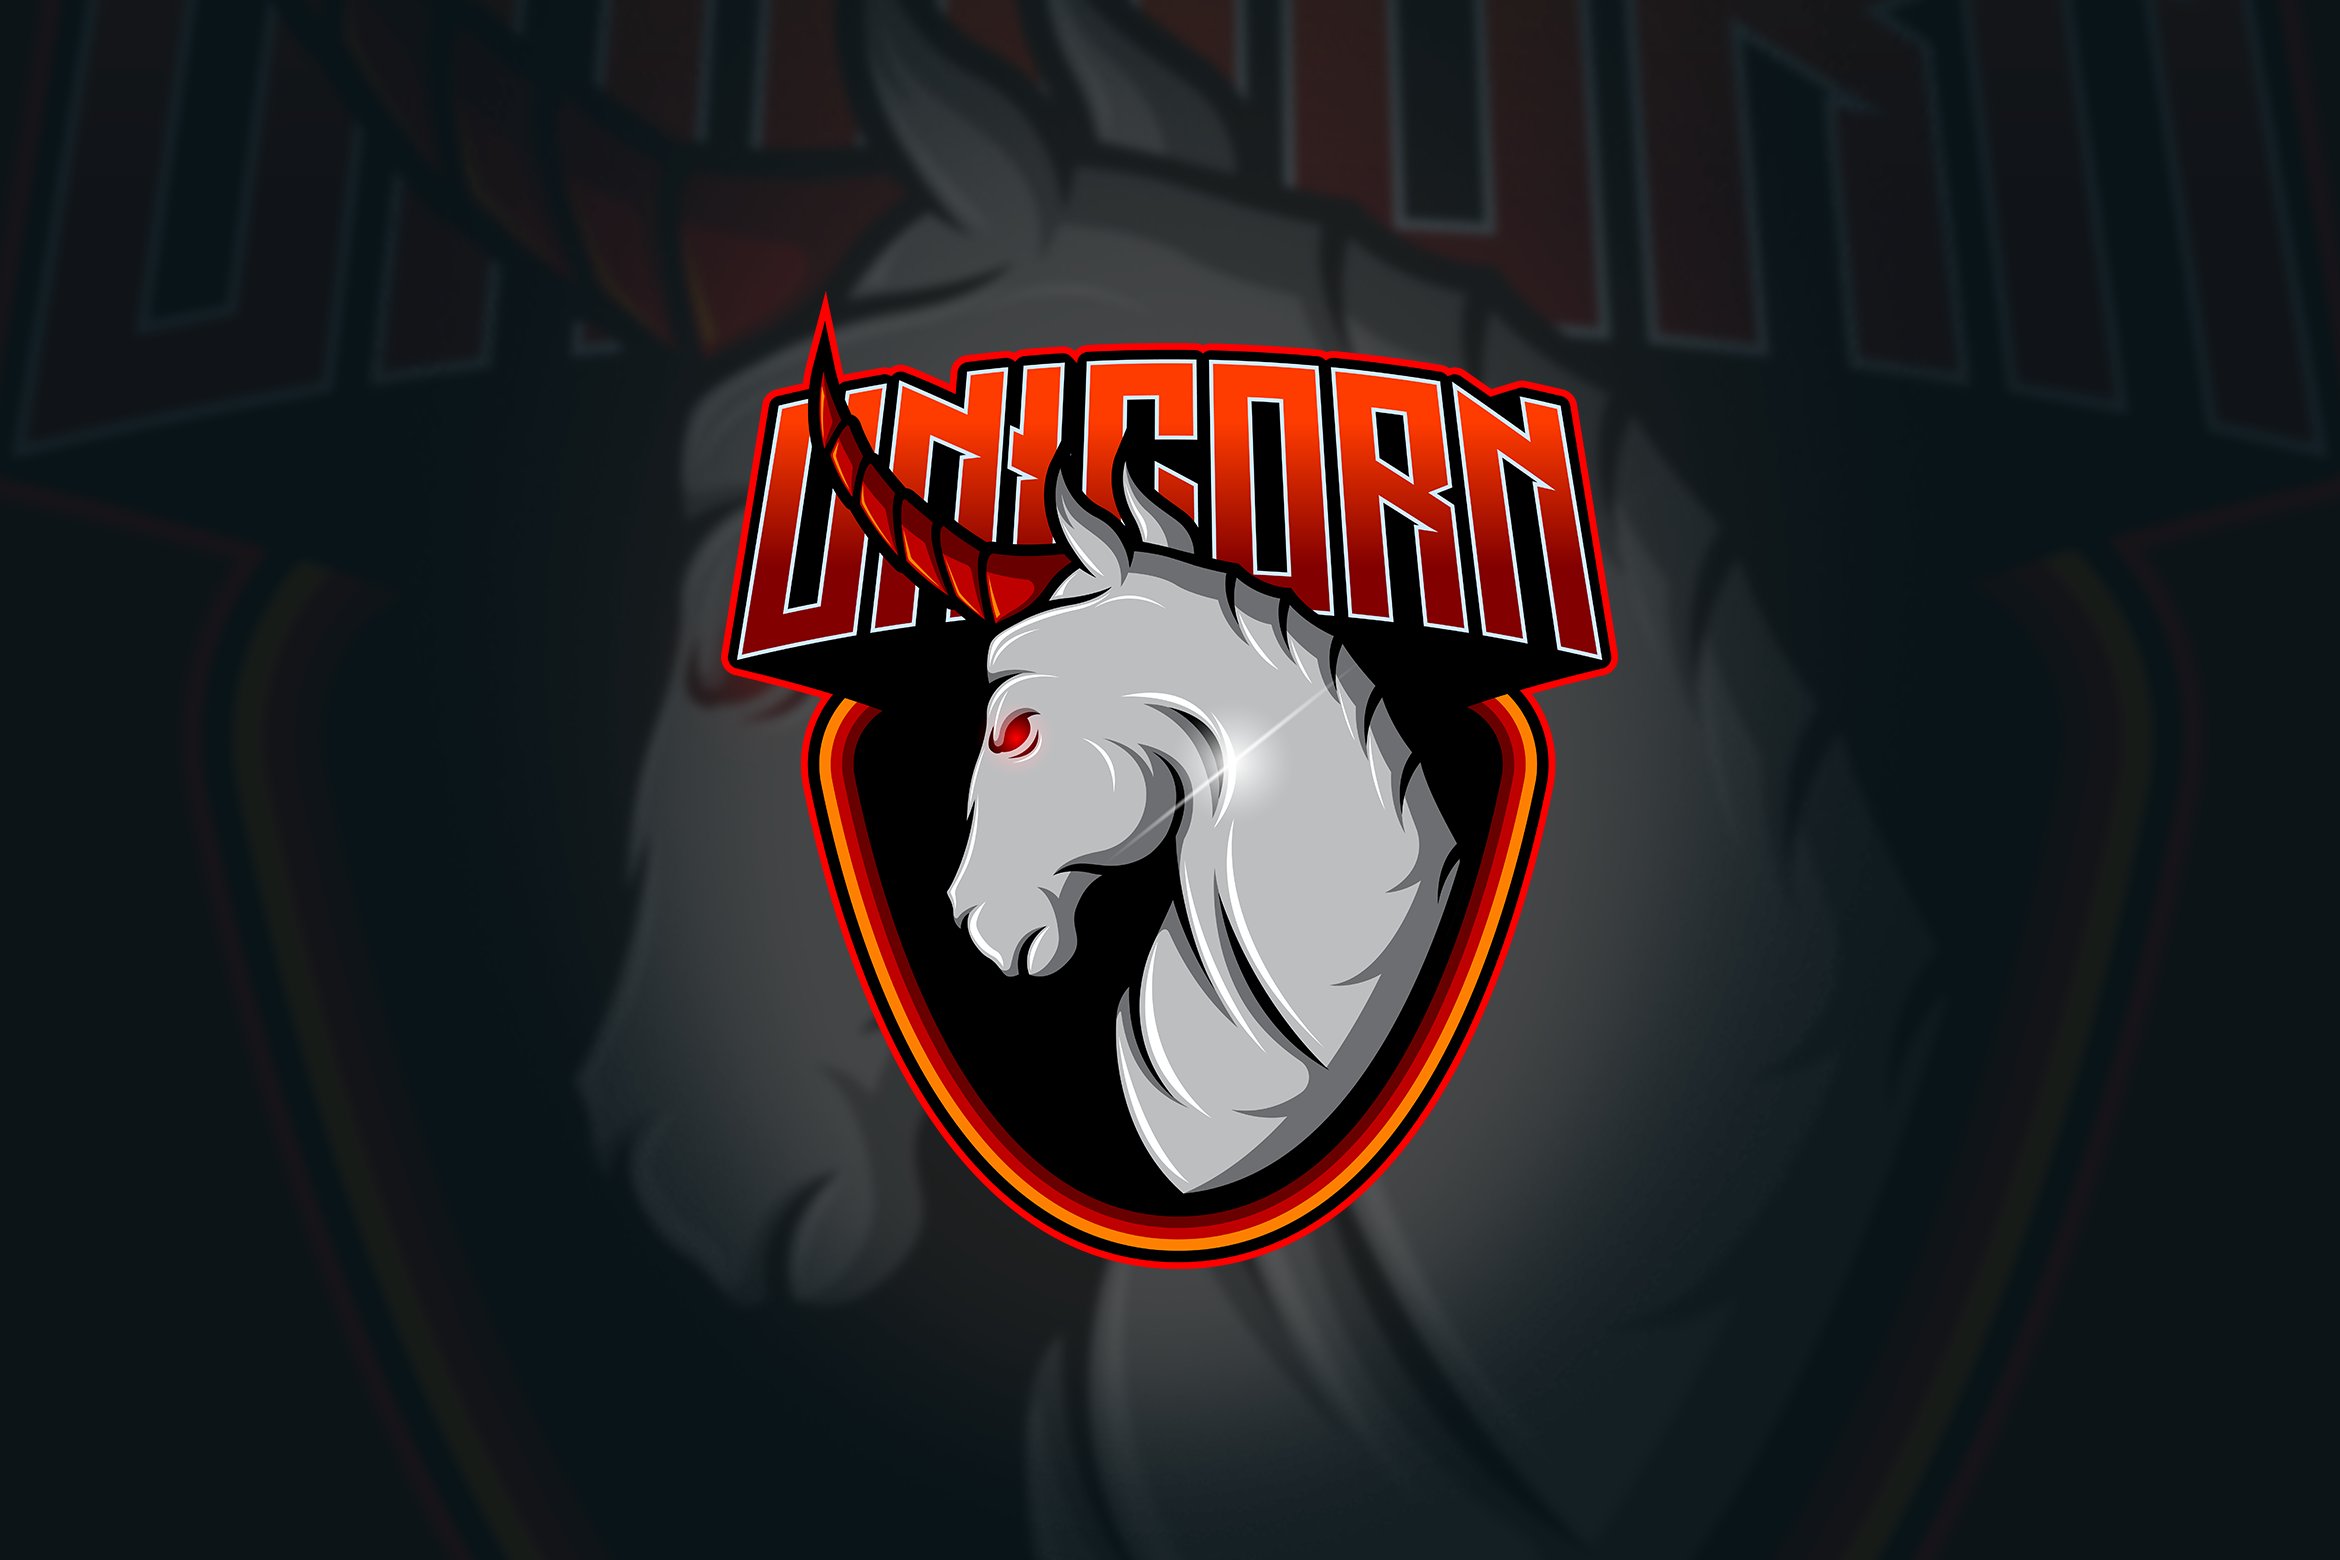 Unicorn - Mascot & Esport Logo cover image.